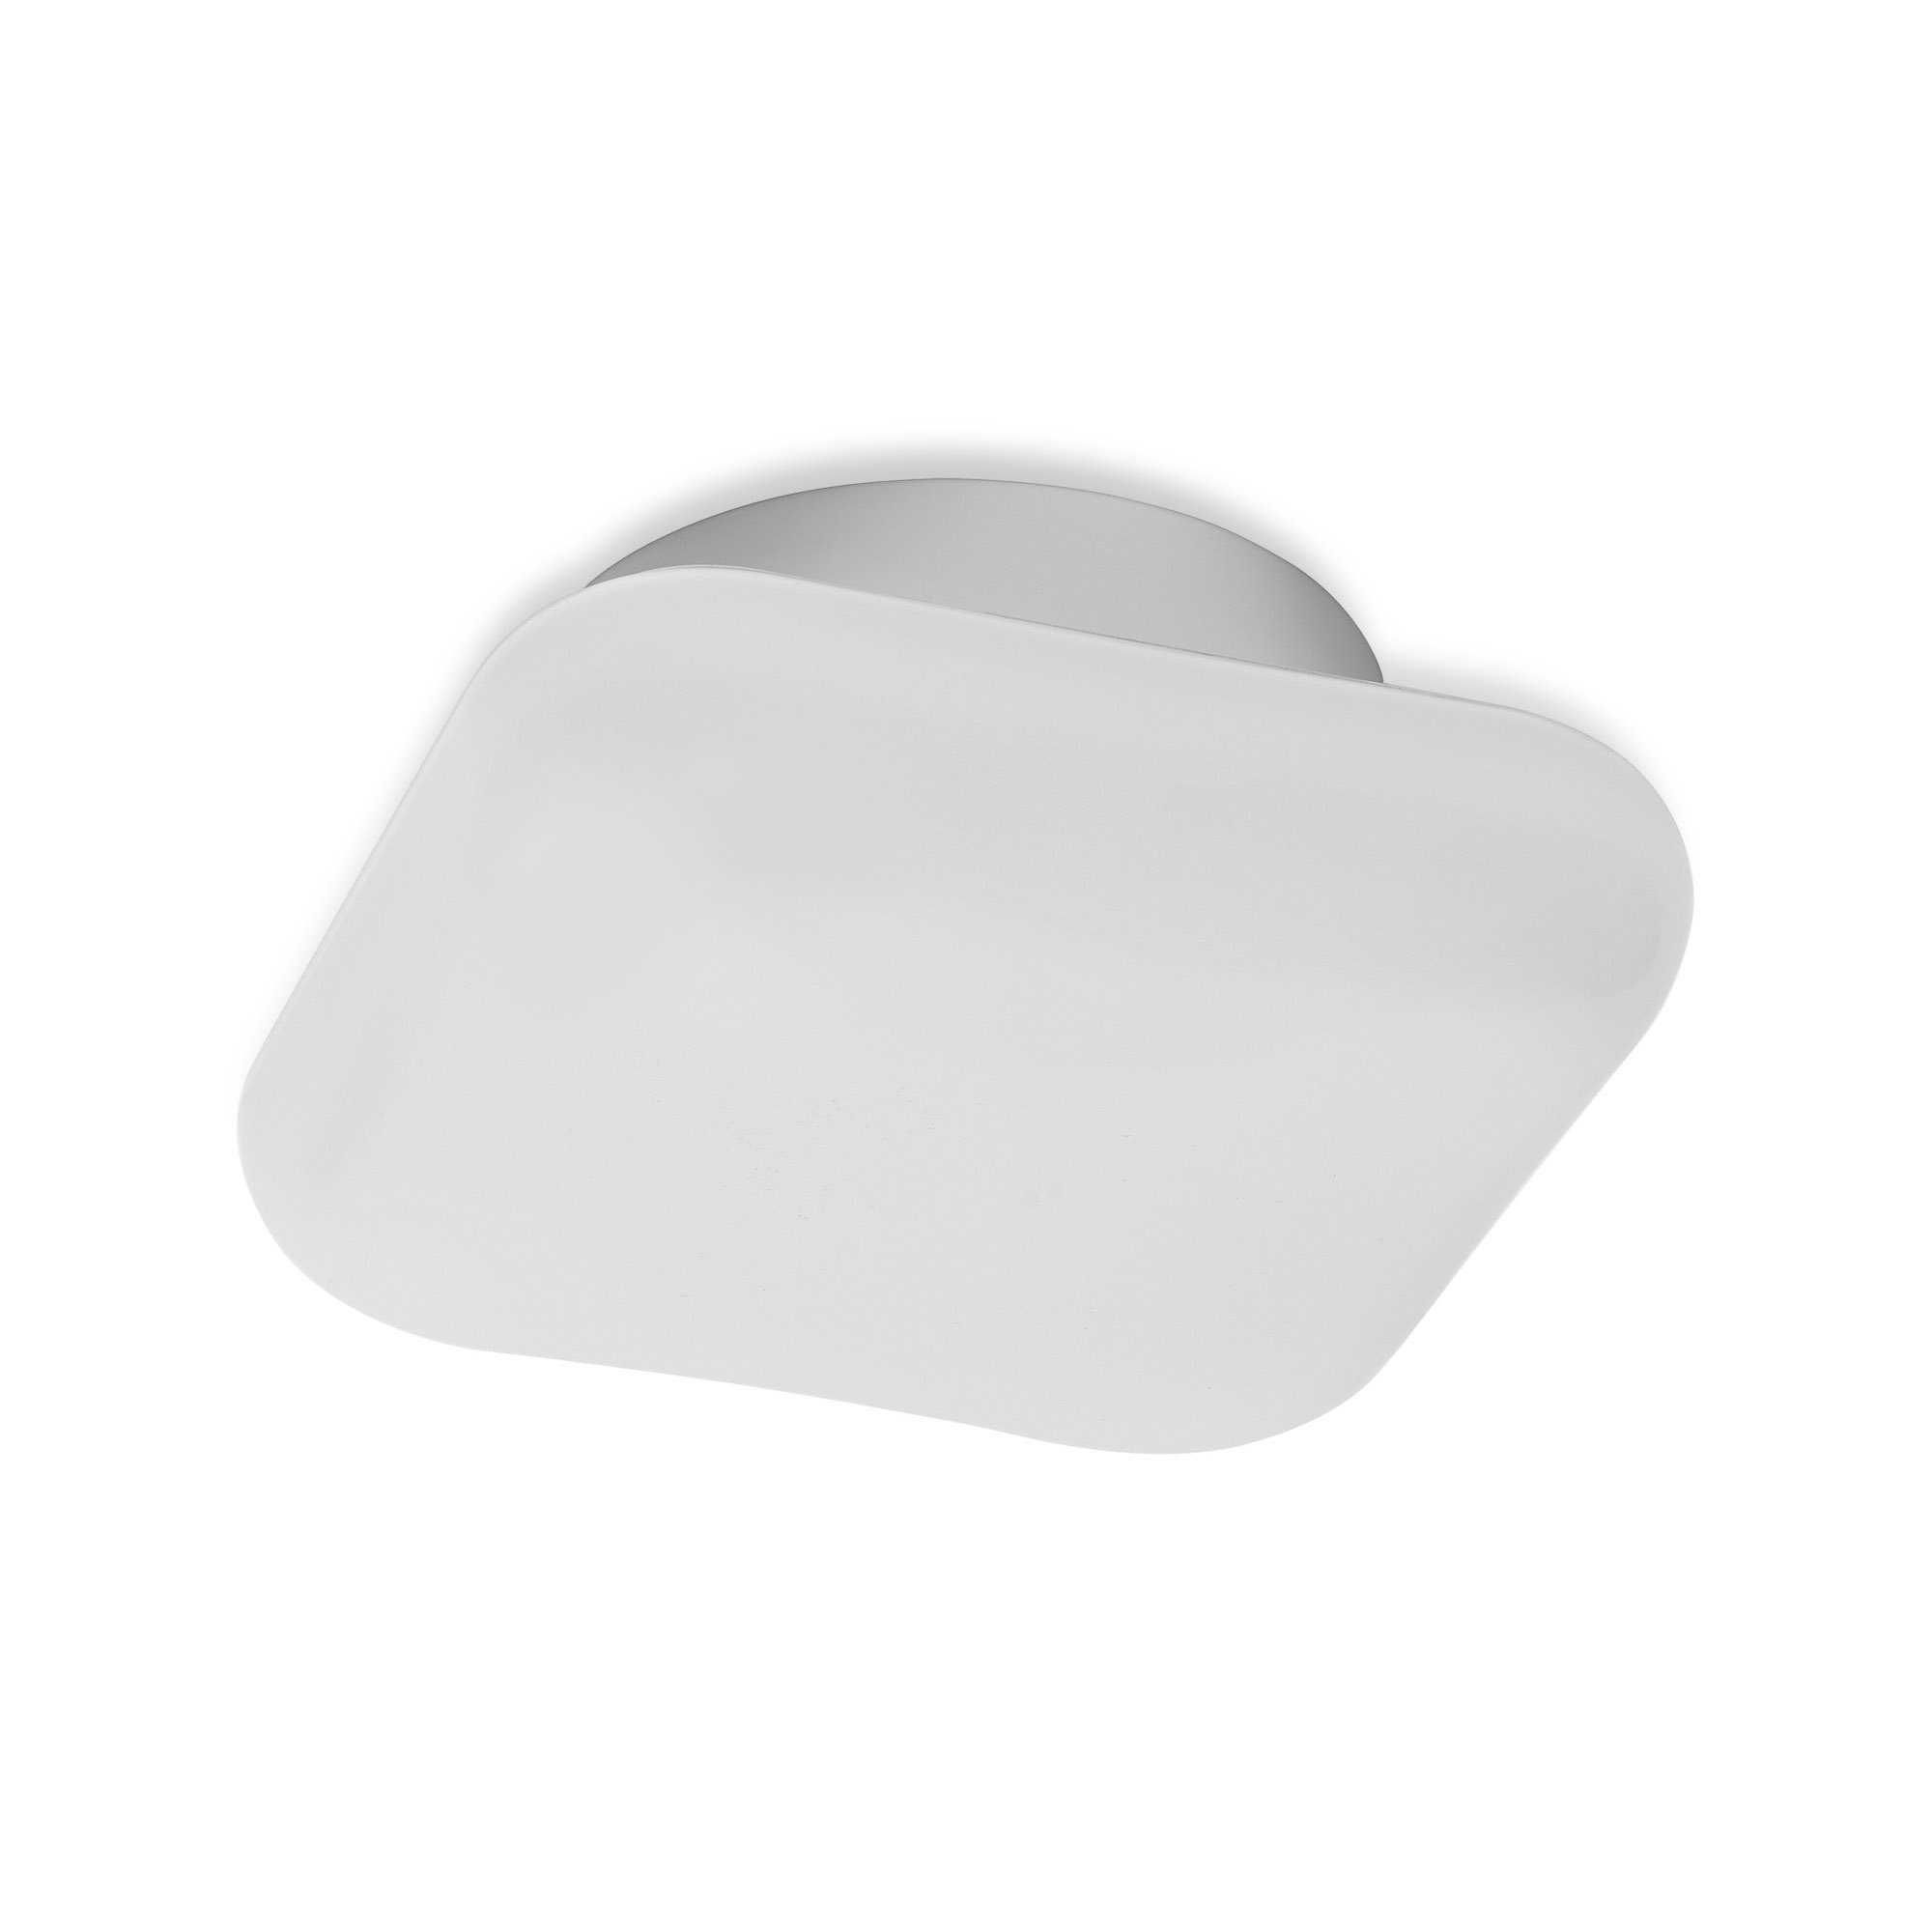 LEDVANCE SMART+ WiFi Tunable White LED Wall Light ORBIS Aqua 200x200mm IP44 white 1200lm